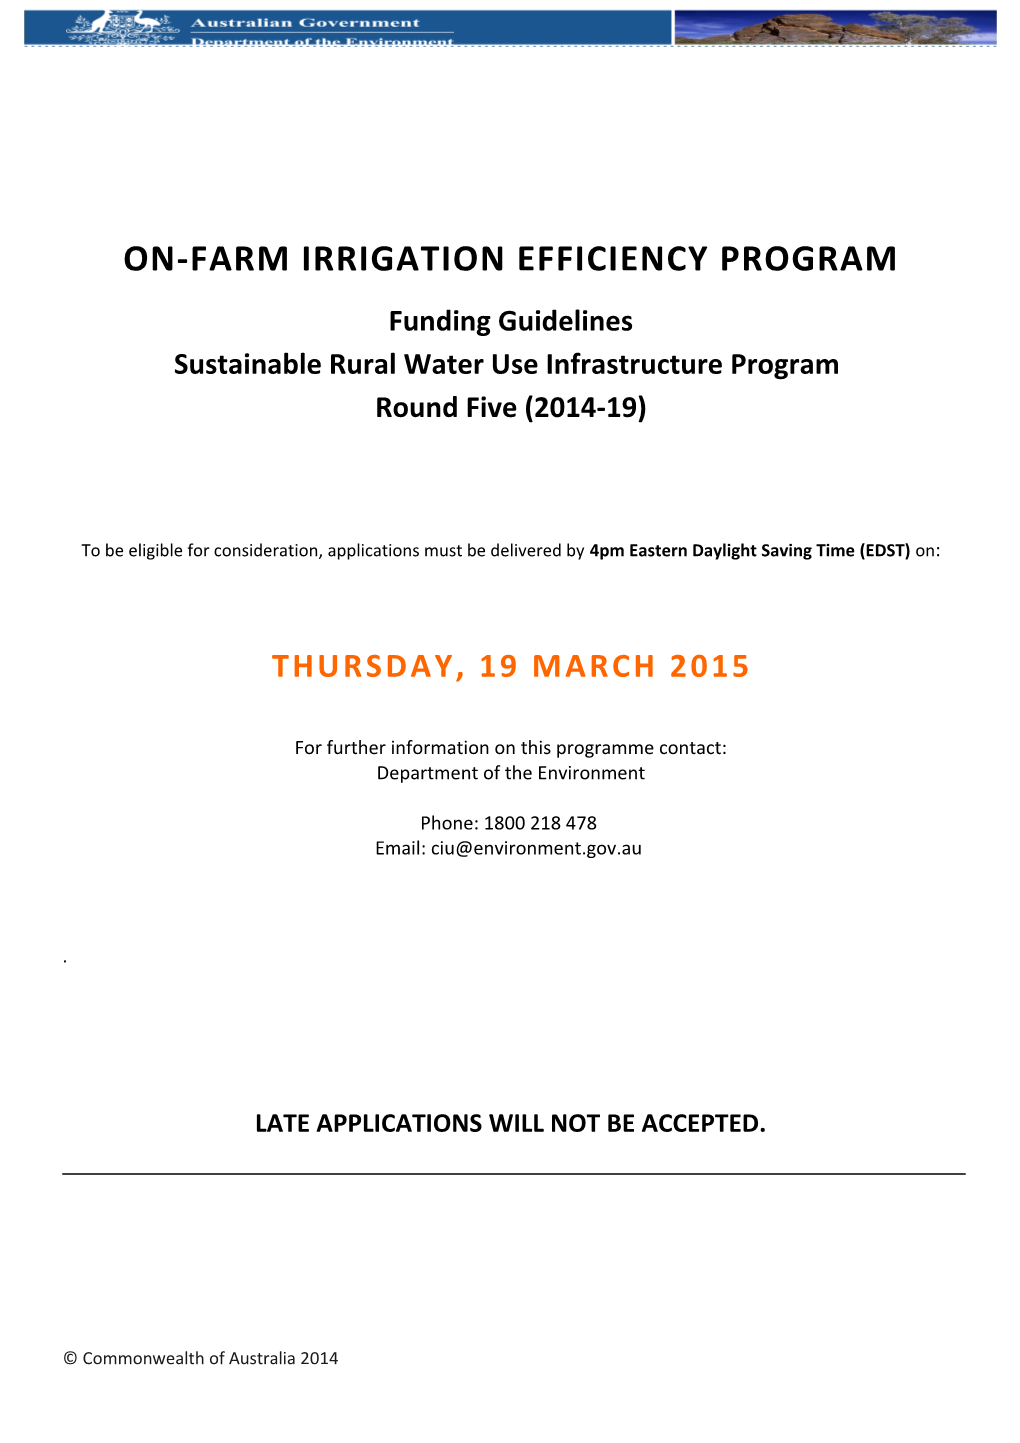 On-Farm Irrigation Efficiency Program Funding Guidelines